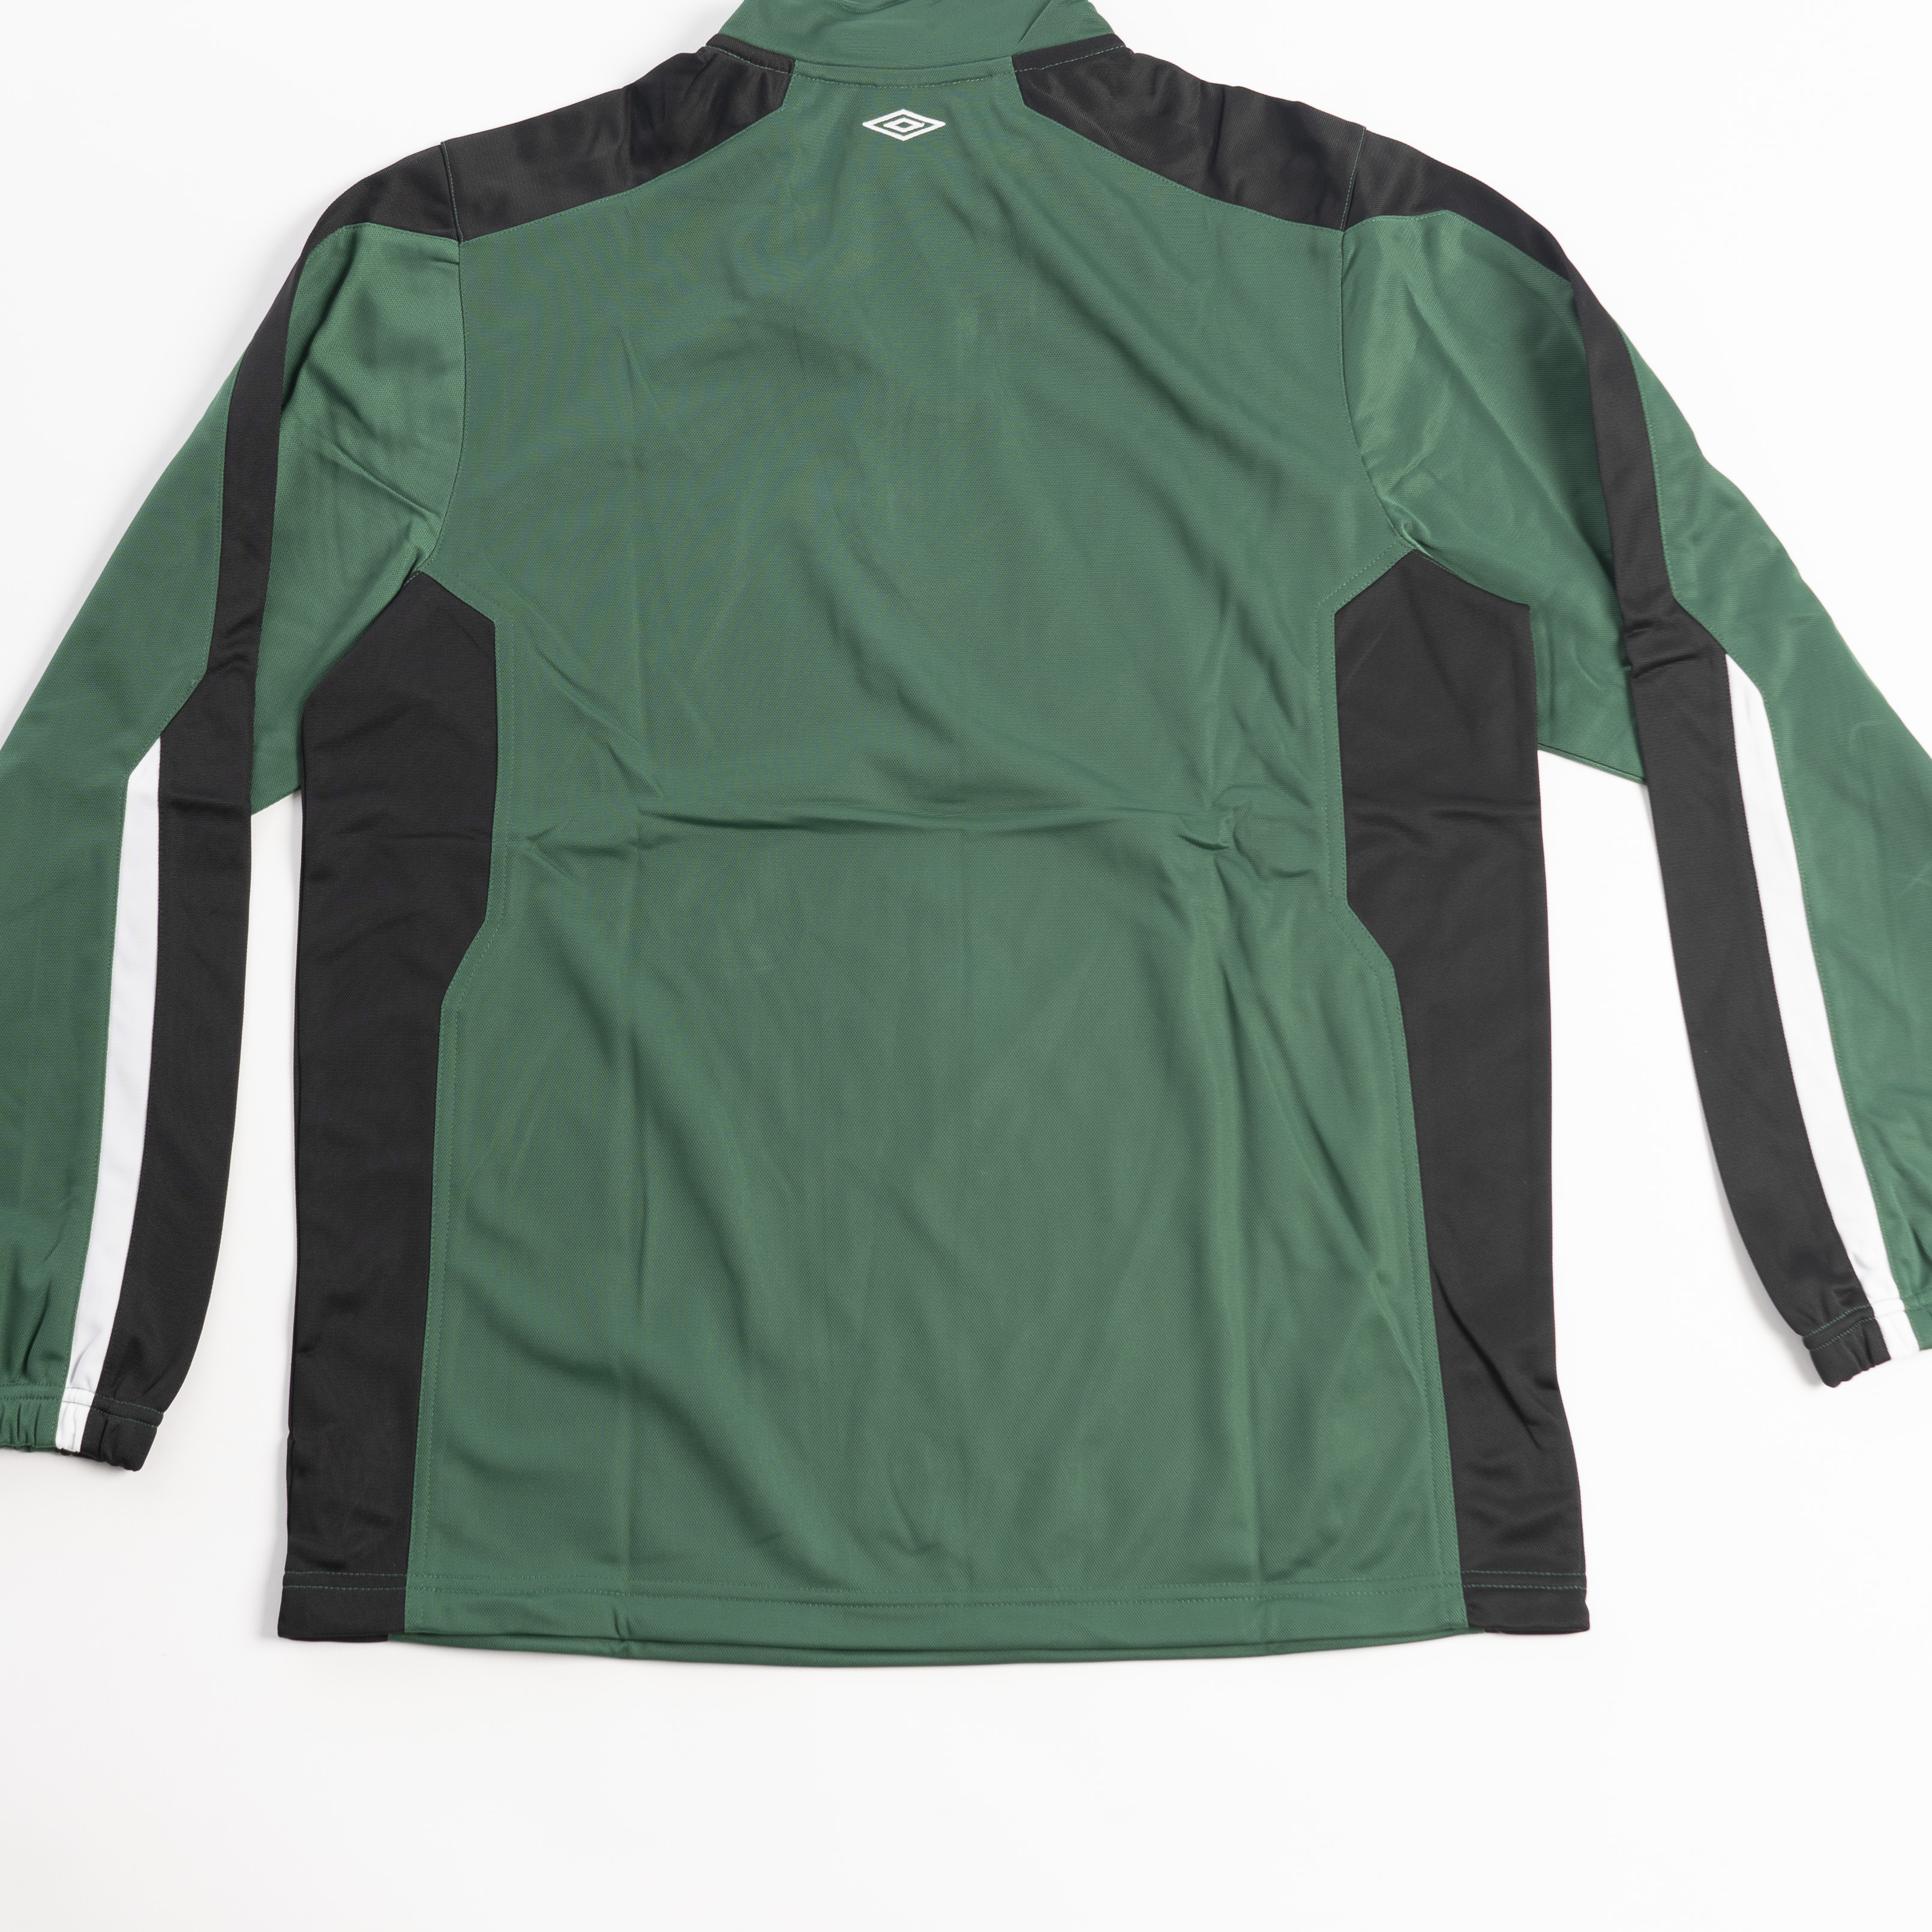 Umbro Men's 1/2 Zip Sweatshirt Green/Black/White Training Jersey